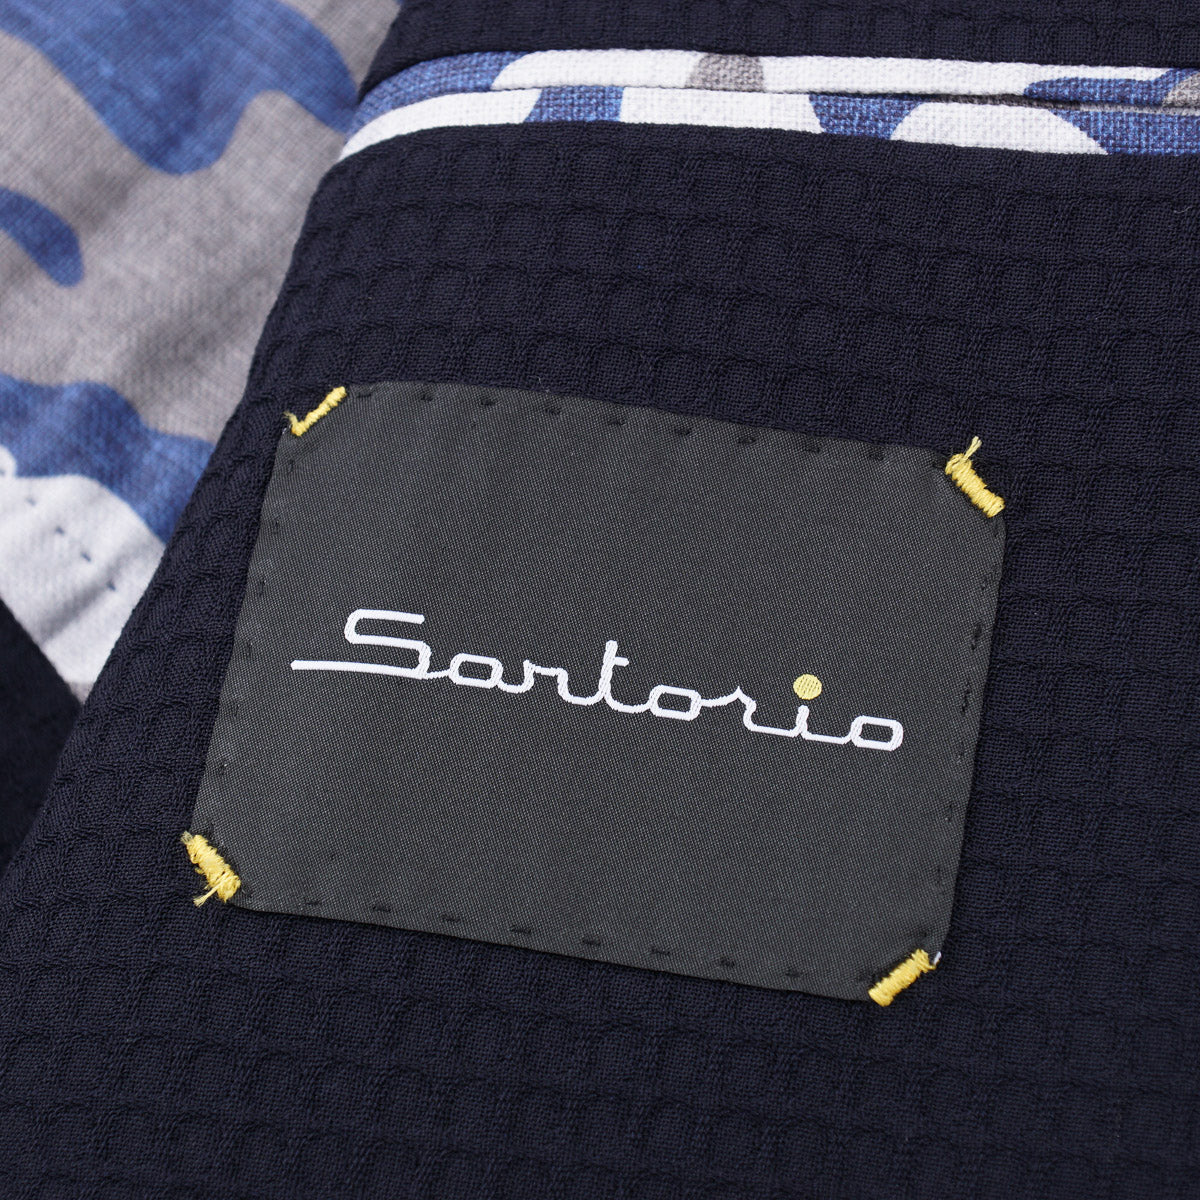 Sartorio Waffle Check Wool Sport Coat - Top Shelf Apparel